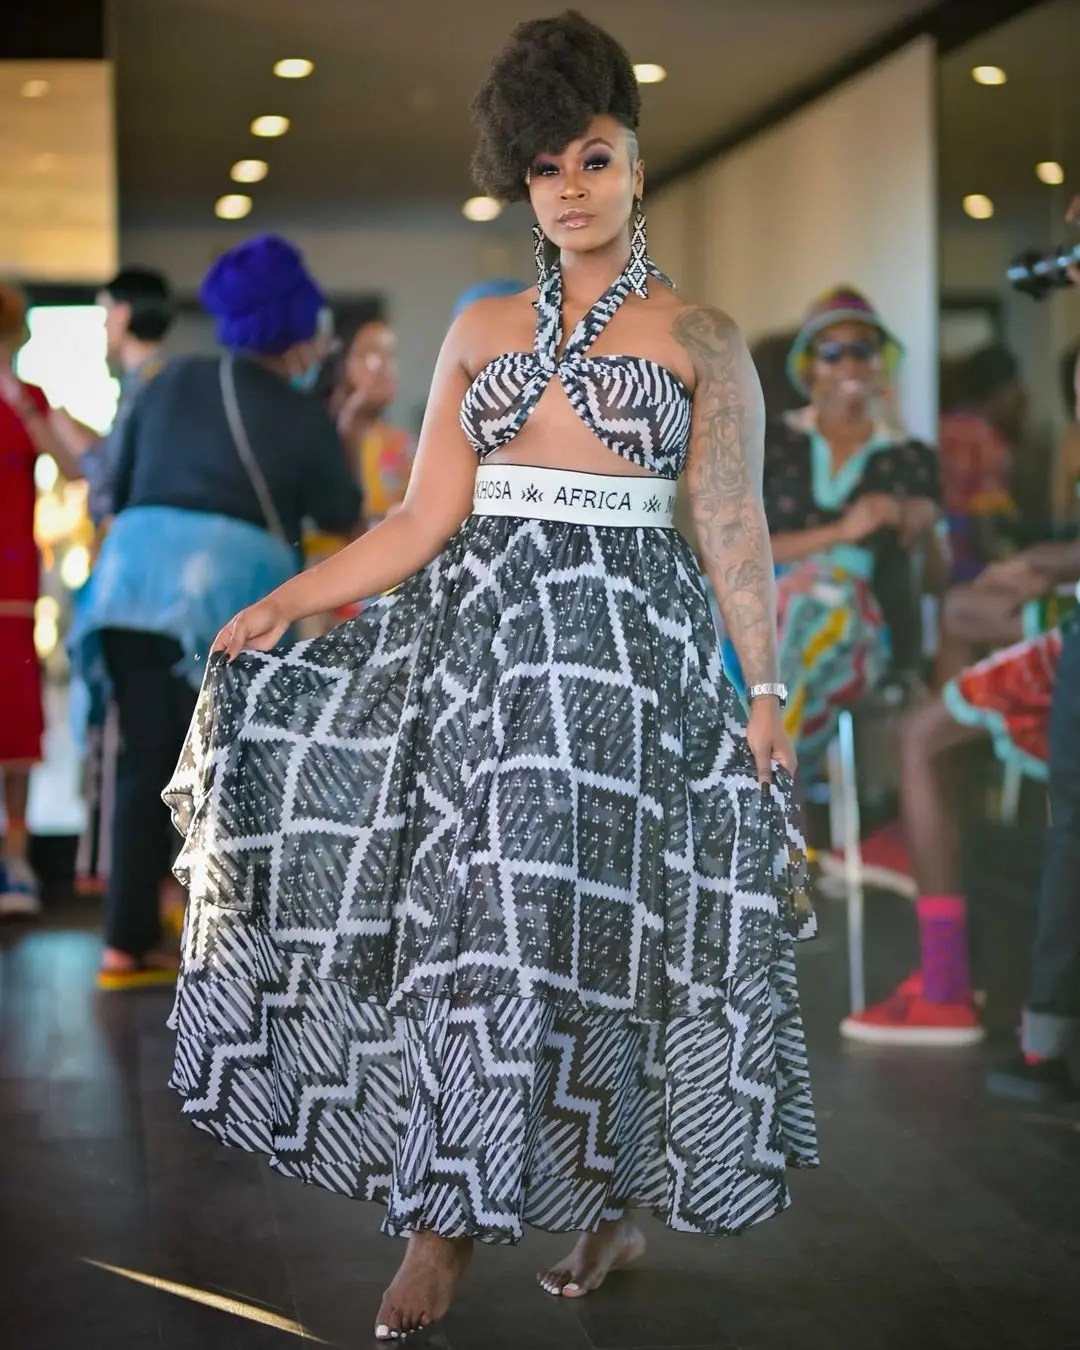 DJ Lamiez Holworthy stuns as Maxhosa model – Photos